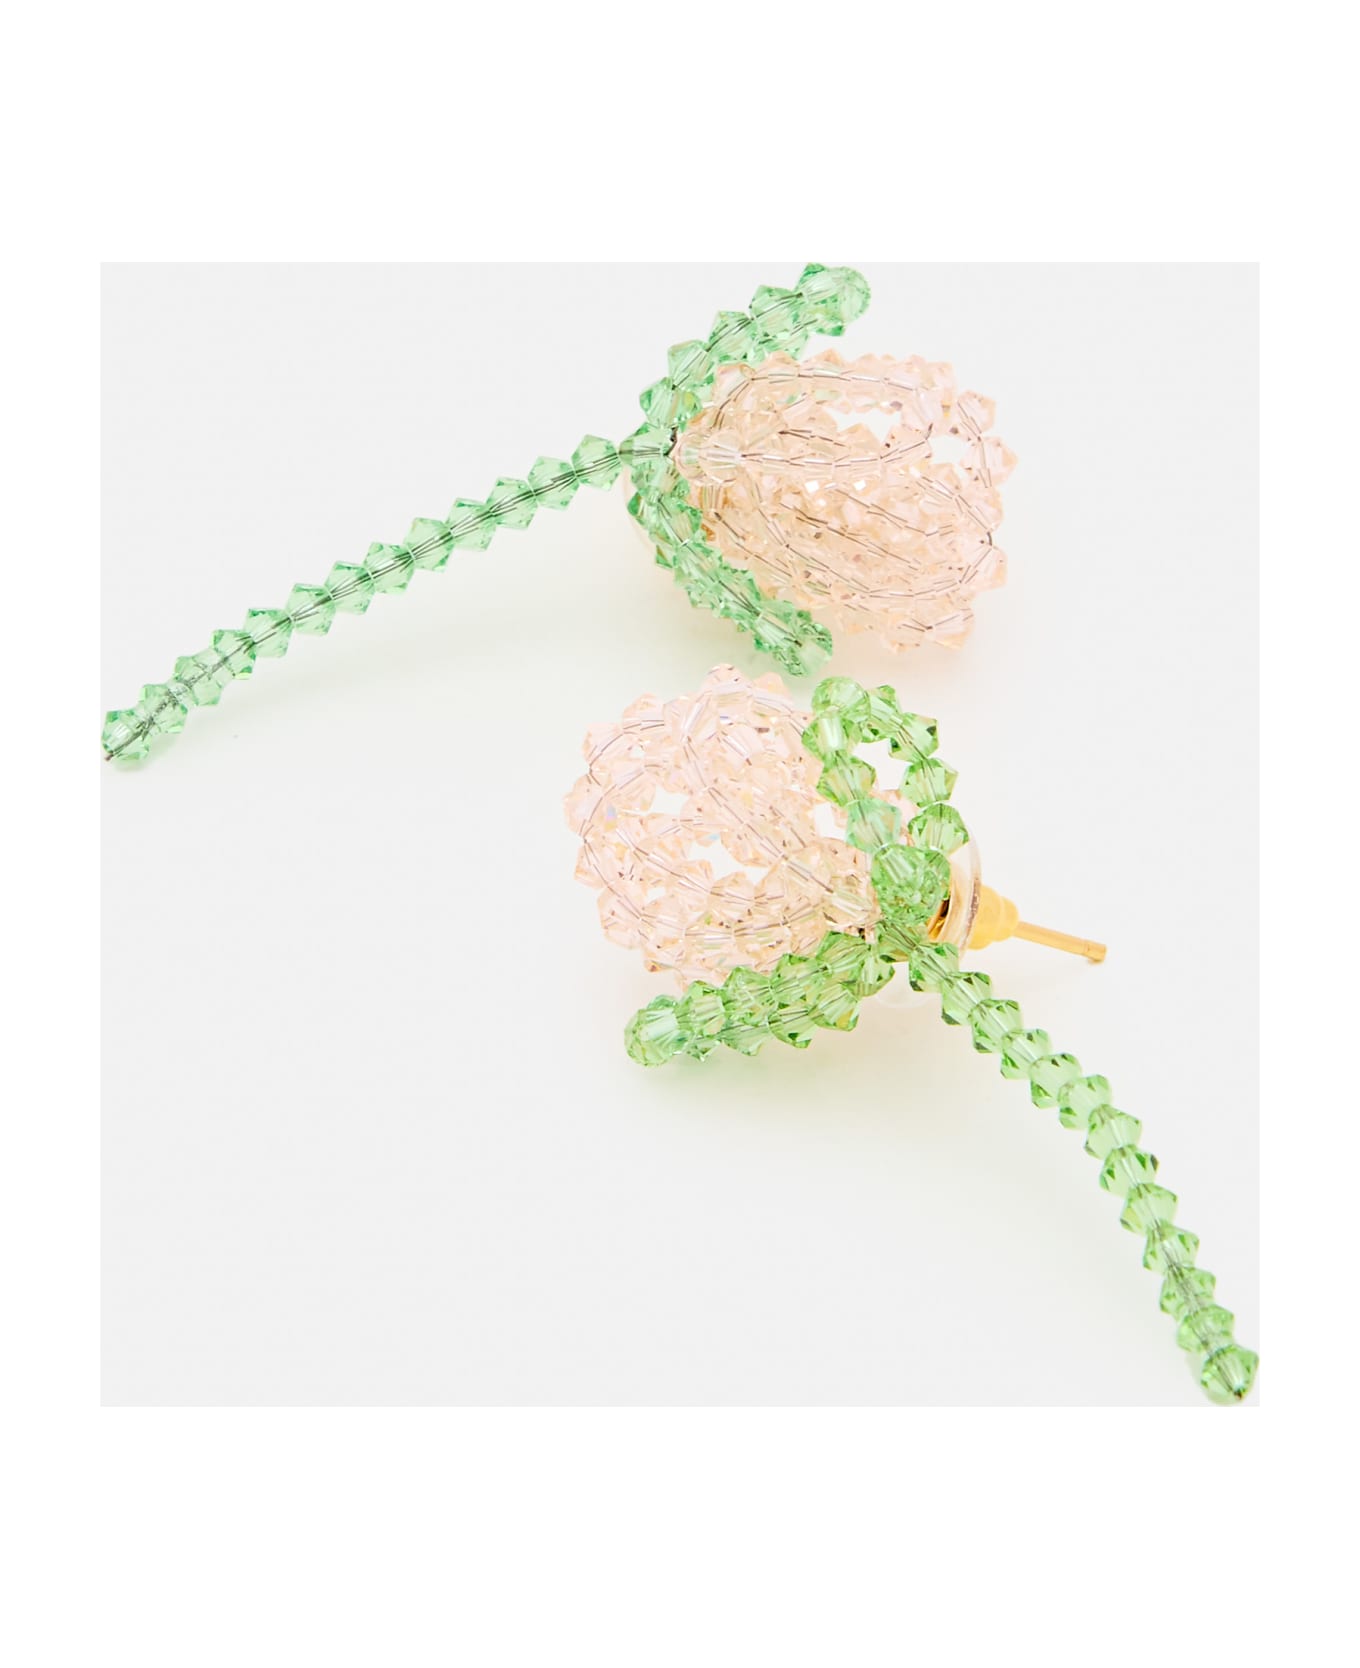 Simone Rocha Cluster Crystal Flower Earring - Pink